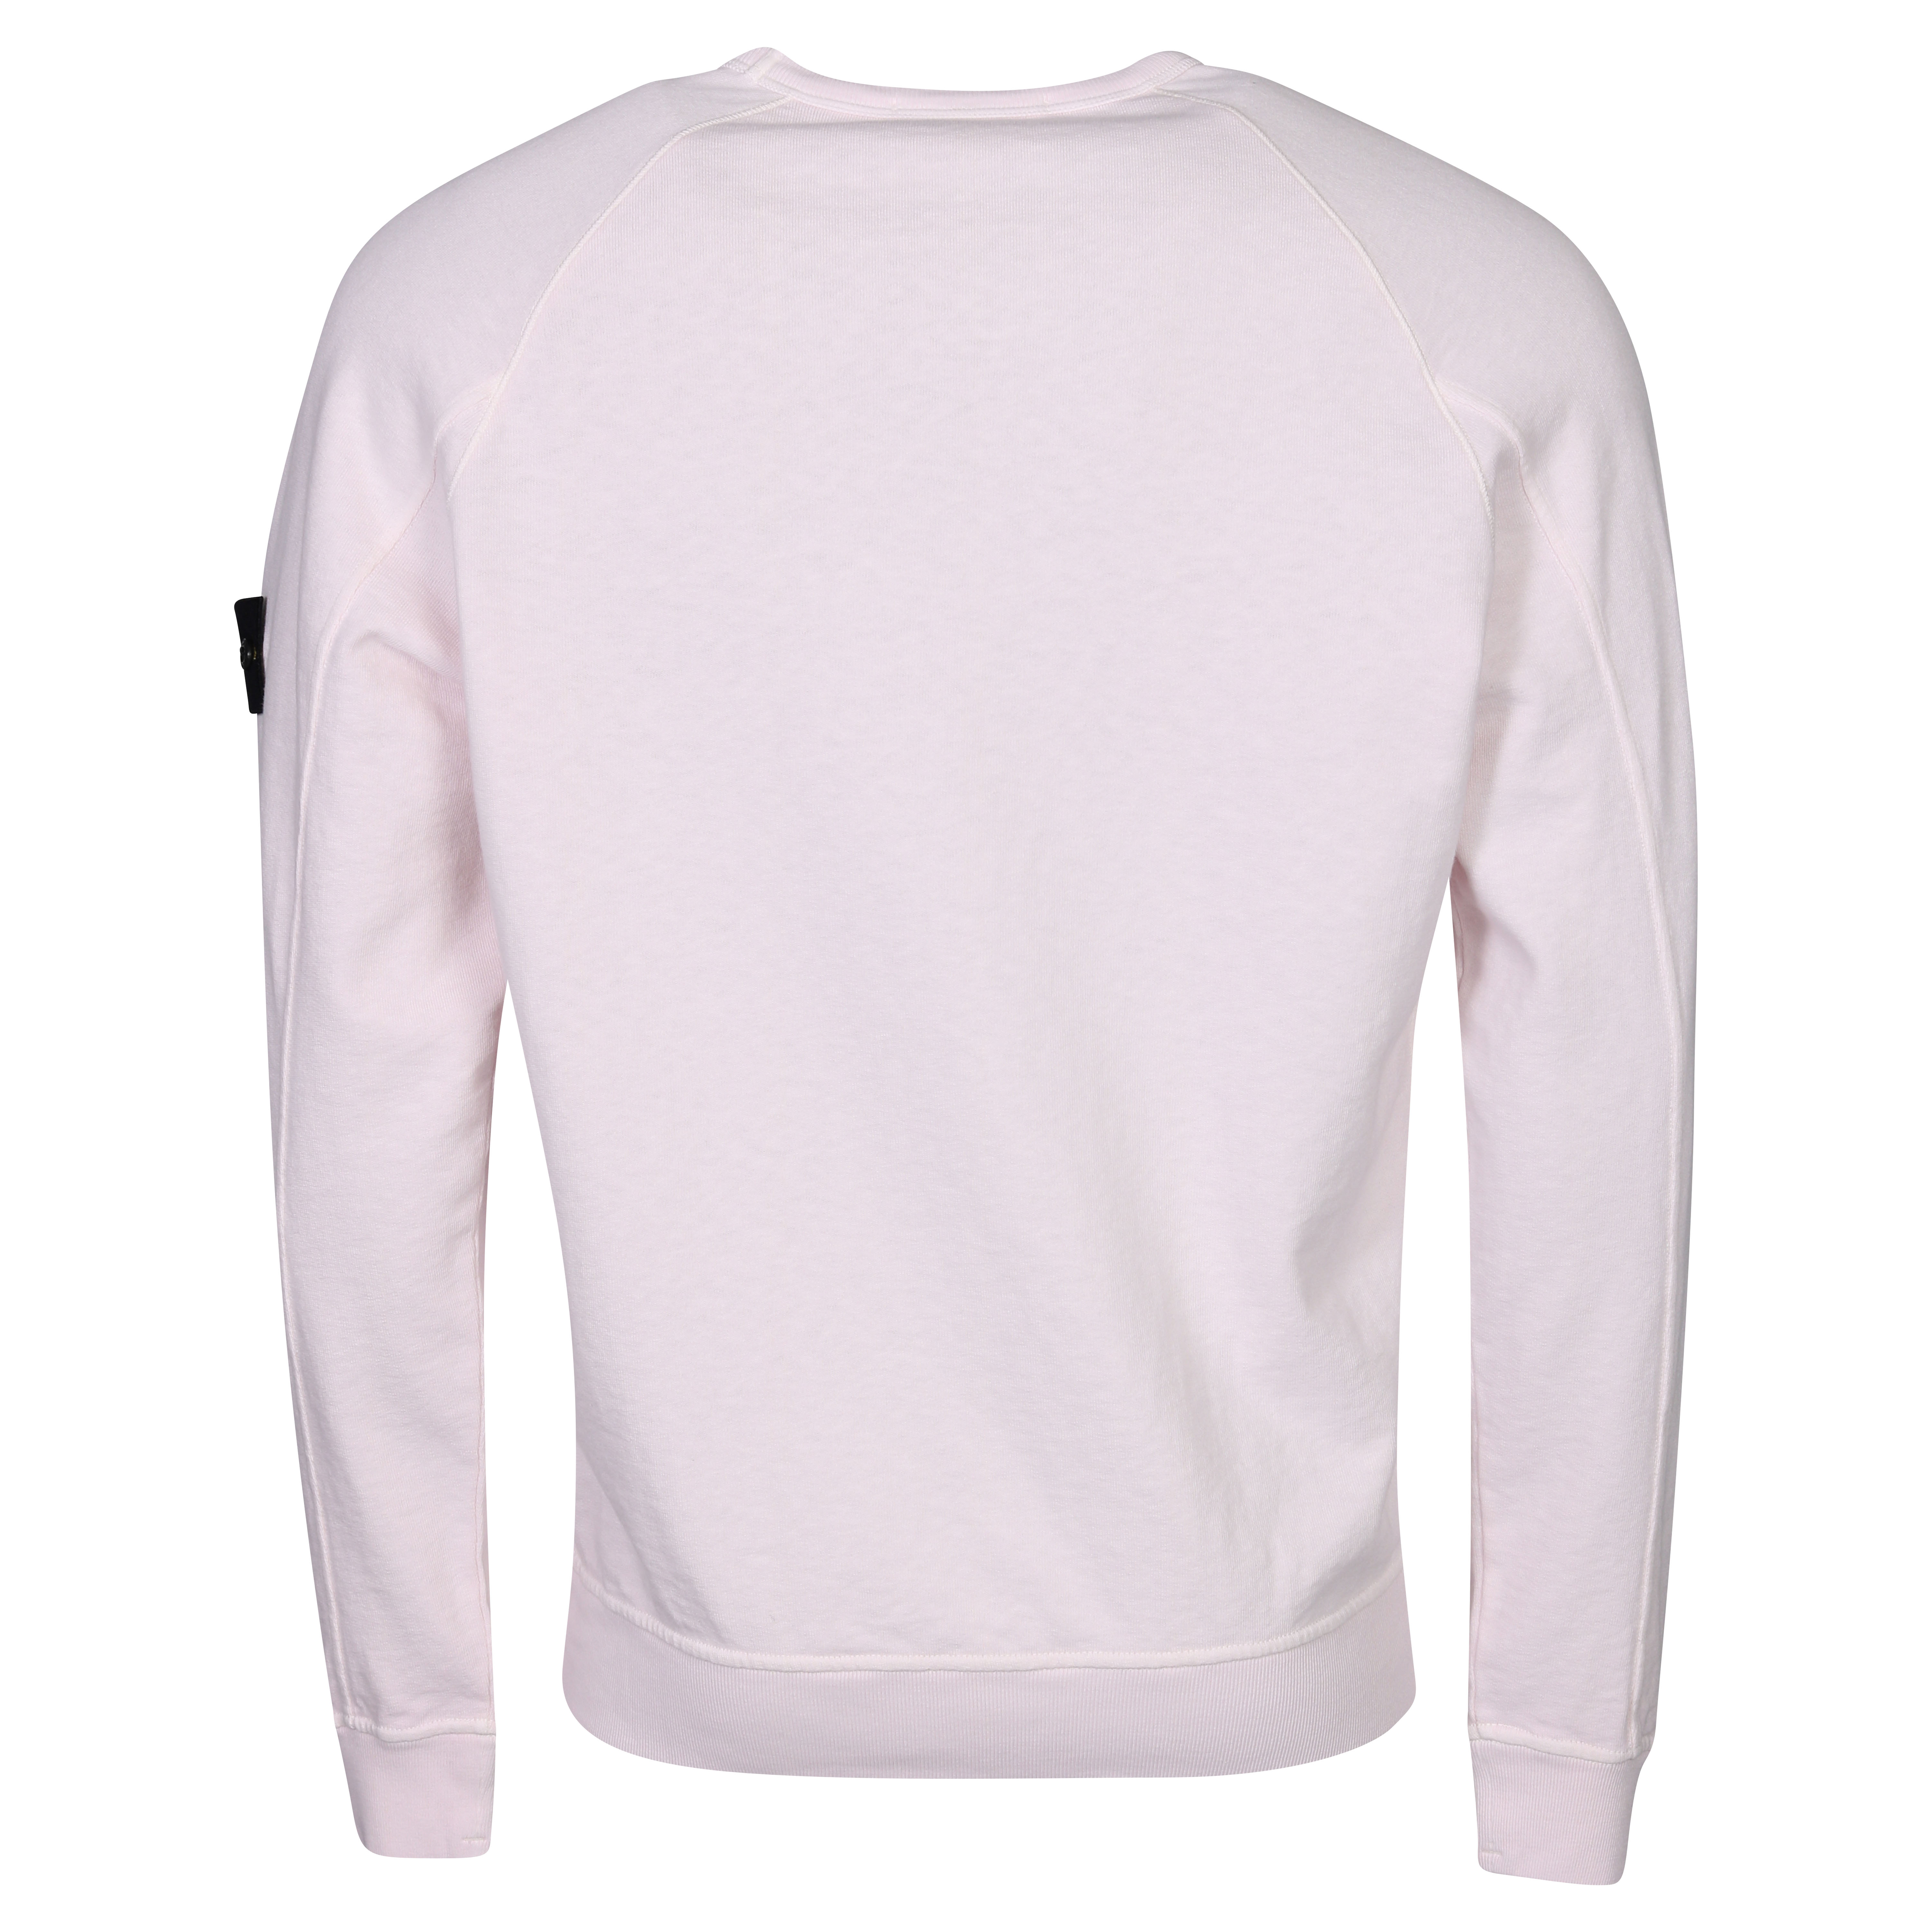 Stone Island Sweatshirt in Washed Light Pink 3XL